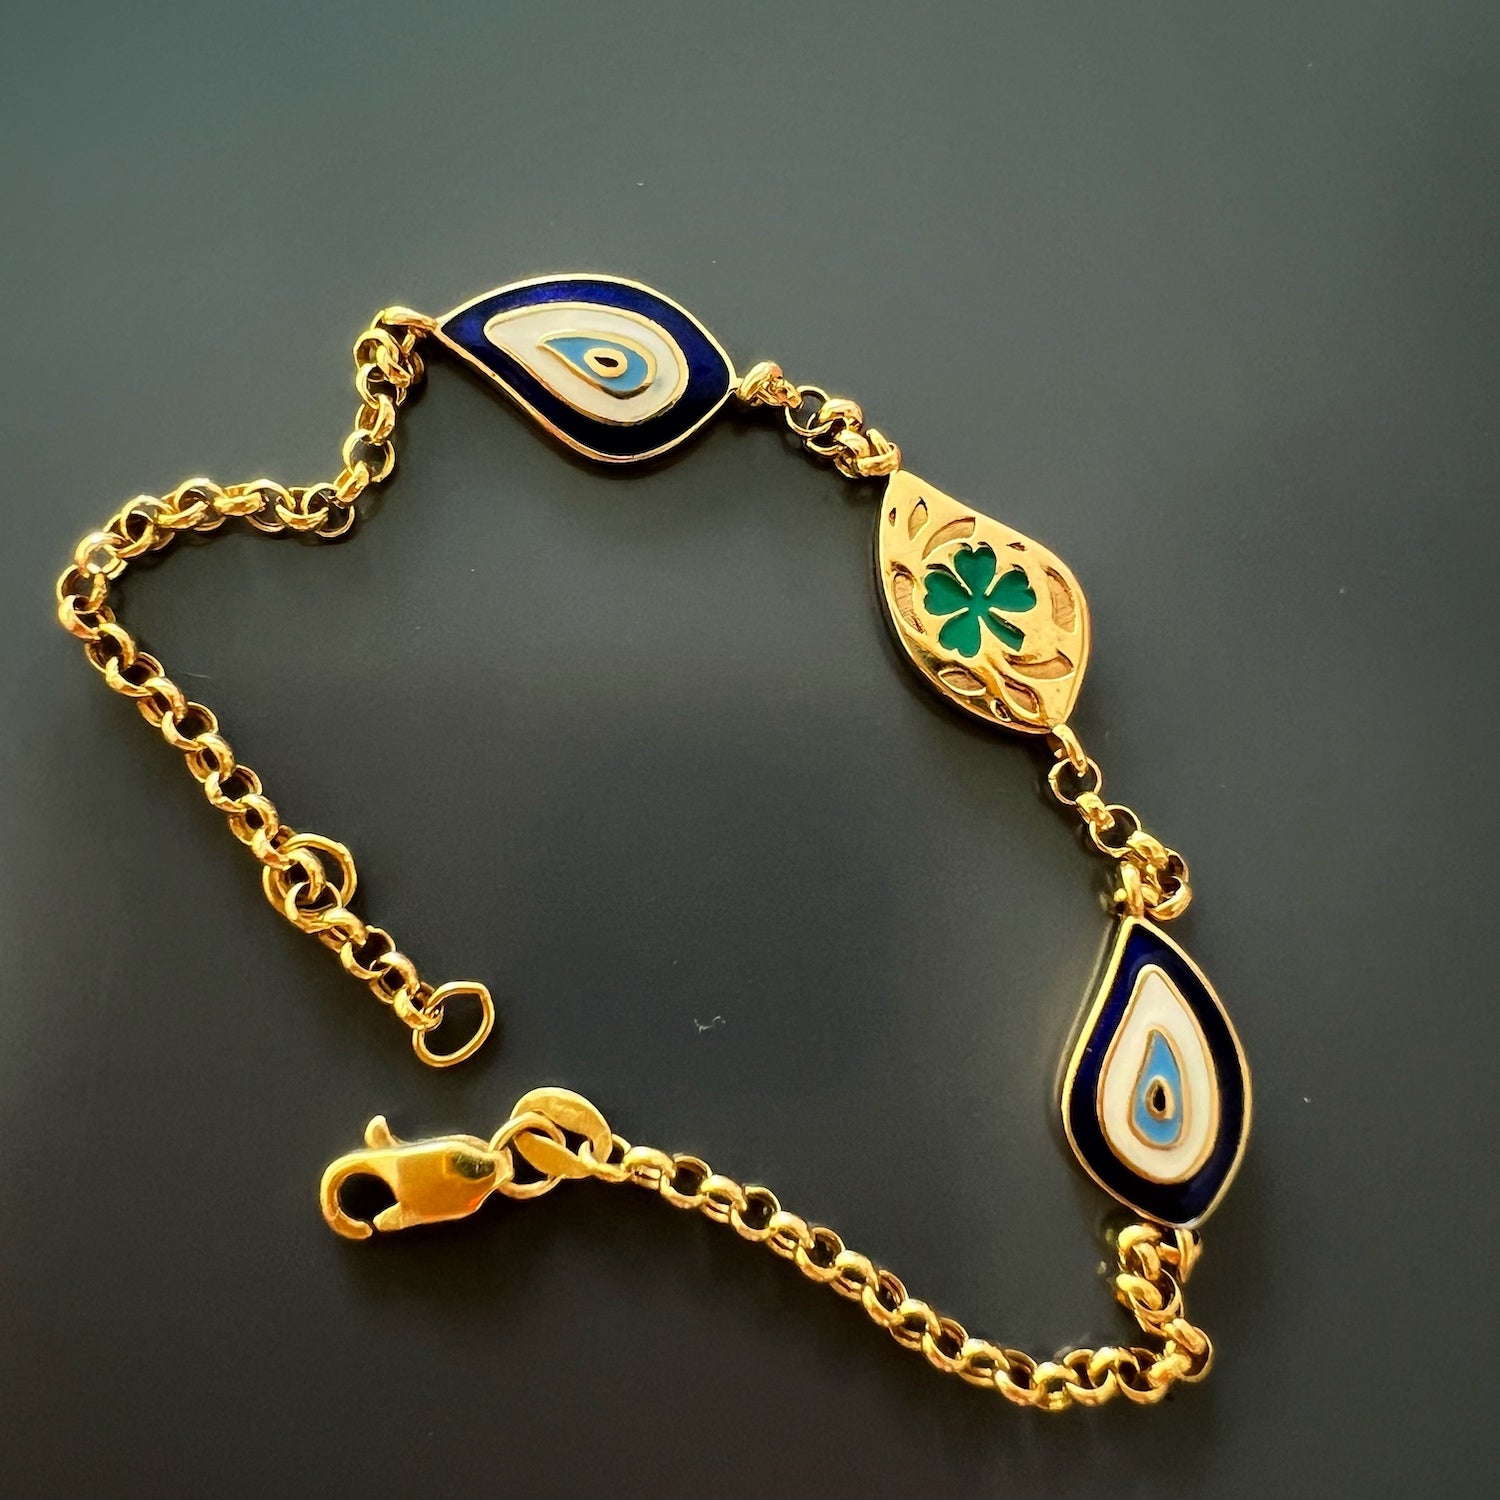 Elegant Gold Bracelet with Clover Symbol - A captivating image displaying the elegant Gold Teardrop Lucky Evil Eye Bracelet, featuring a stunning green enamel clover symbol on the back.